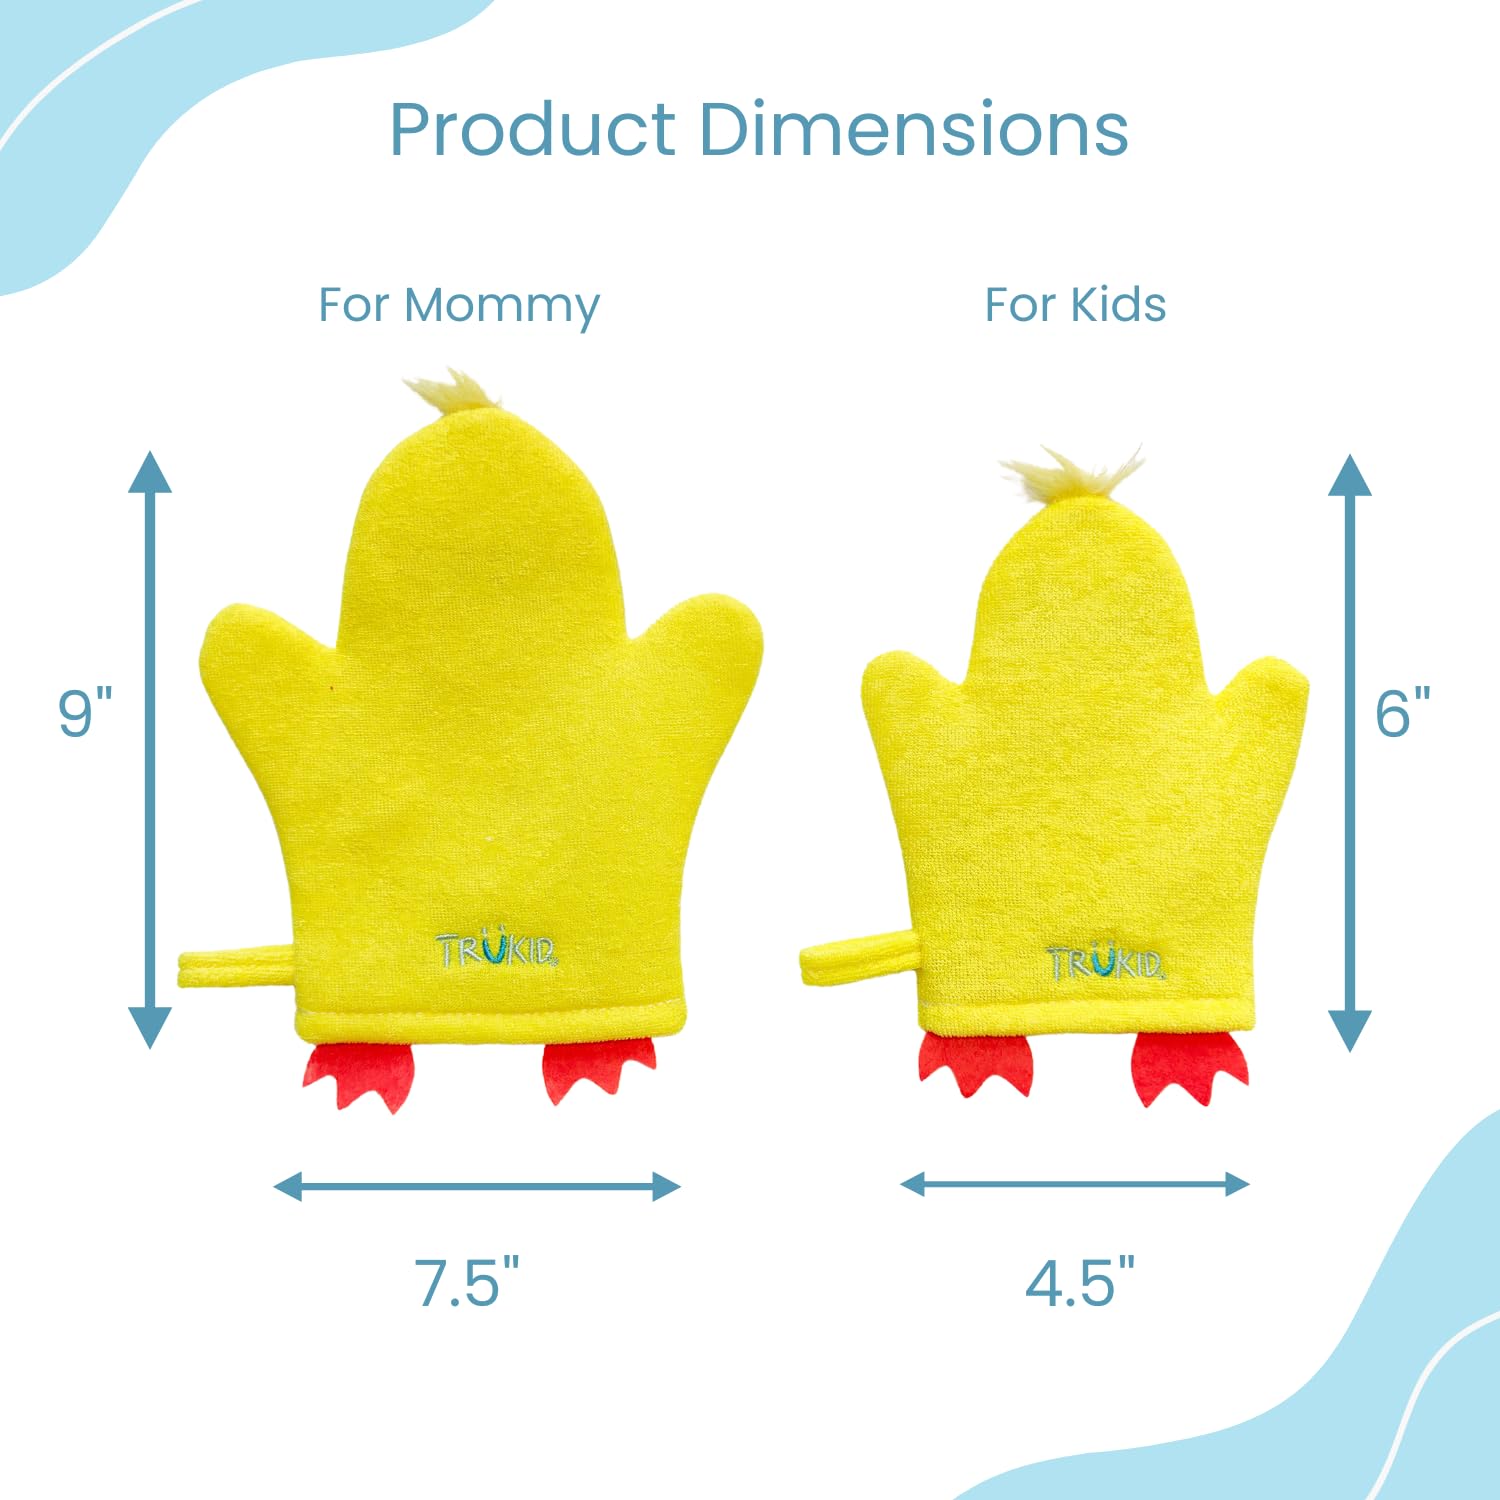 TruKid Bubble Podz & BubbleGlove Bundle - Includes 2-Set of Bath Wash Gloves for Parent & Child, Bubble Bath Pods Yumberry10ct, Baby Bath Essentials, Gentle for Sensitive Skin of Kids, Toddlers